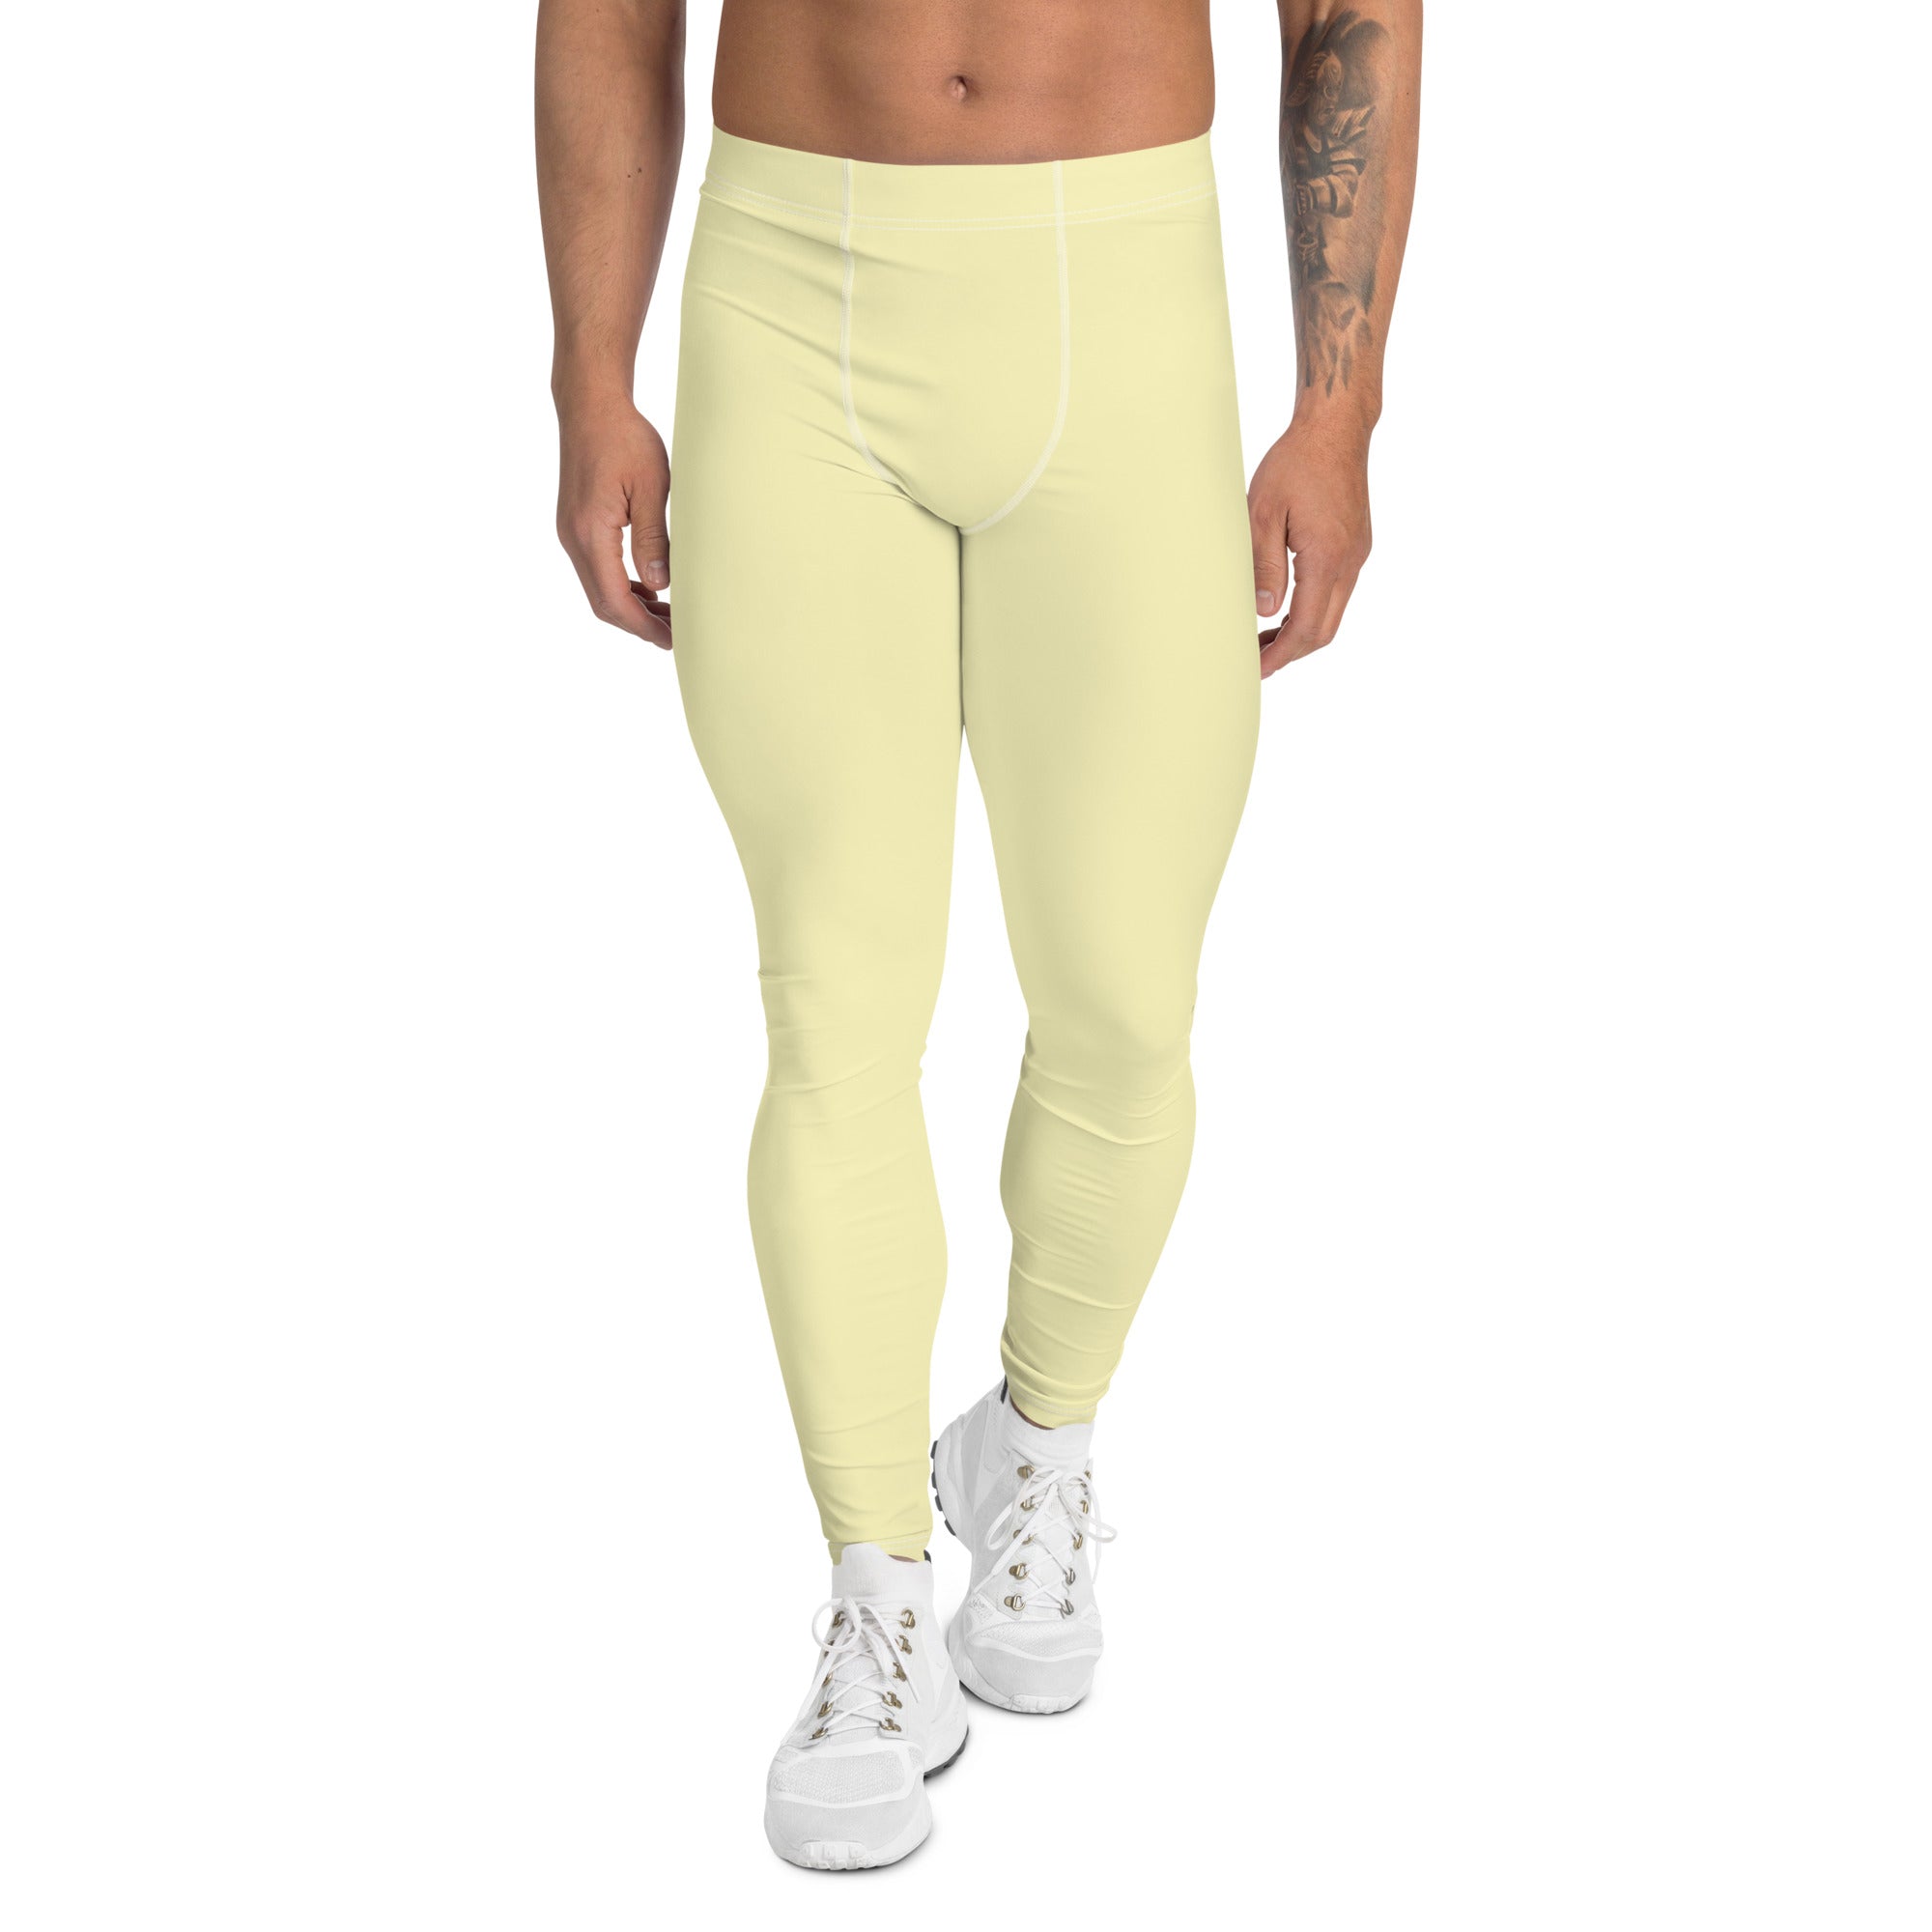 ACCLAIM Athens Mens Running Stirrup Fitness Reflective Leggings Fluo Yellow  | eBay